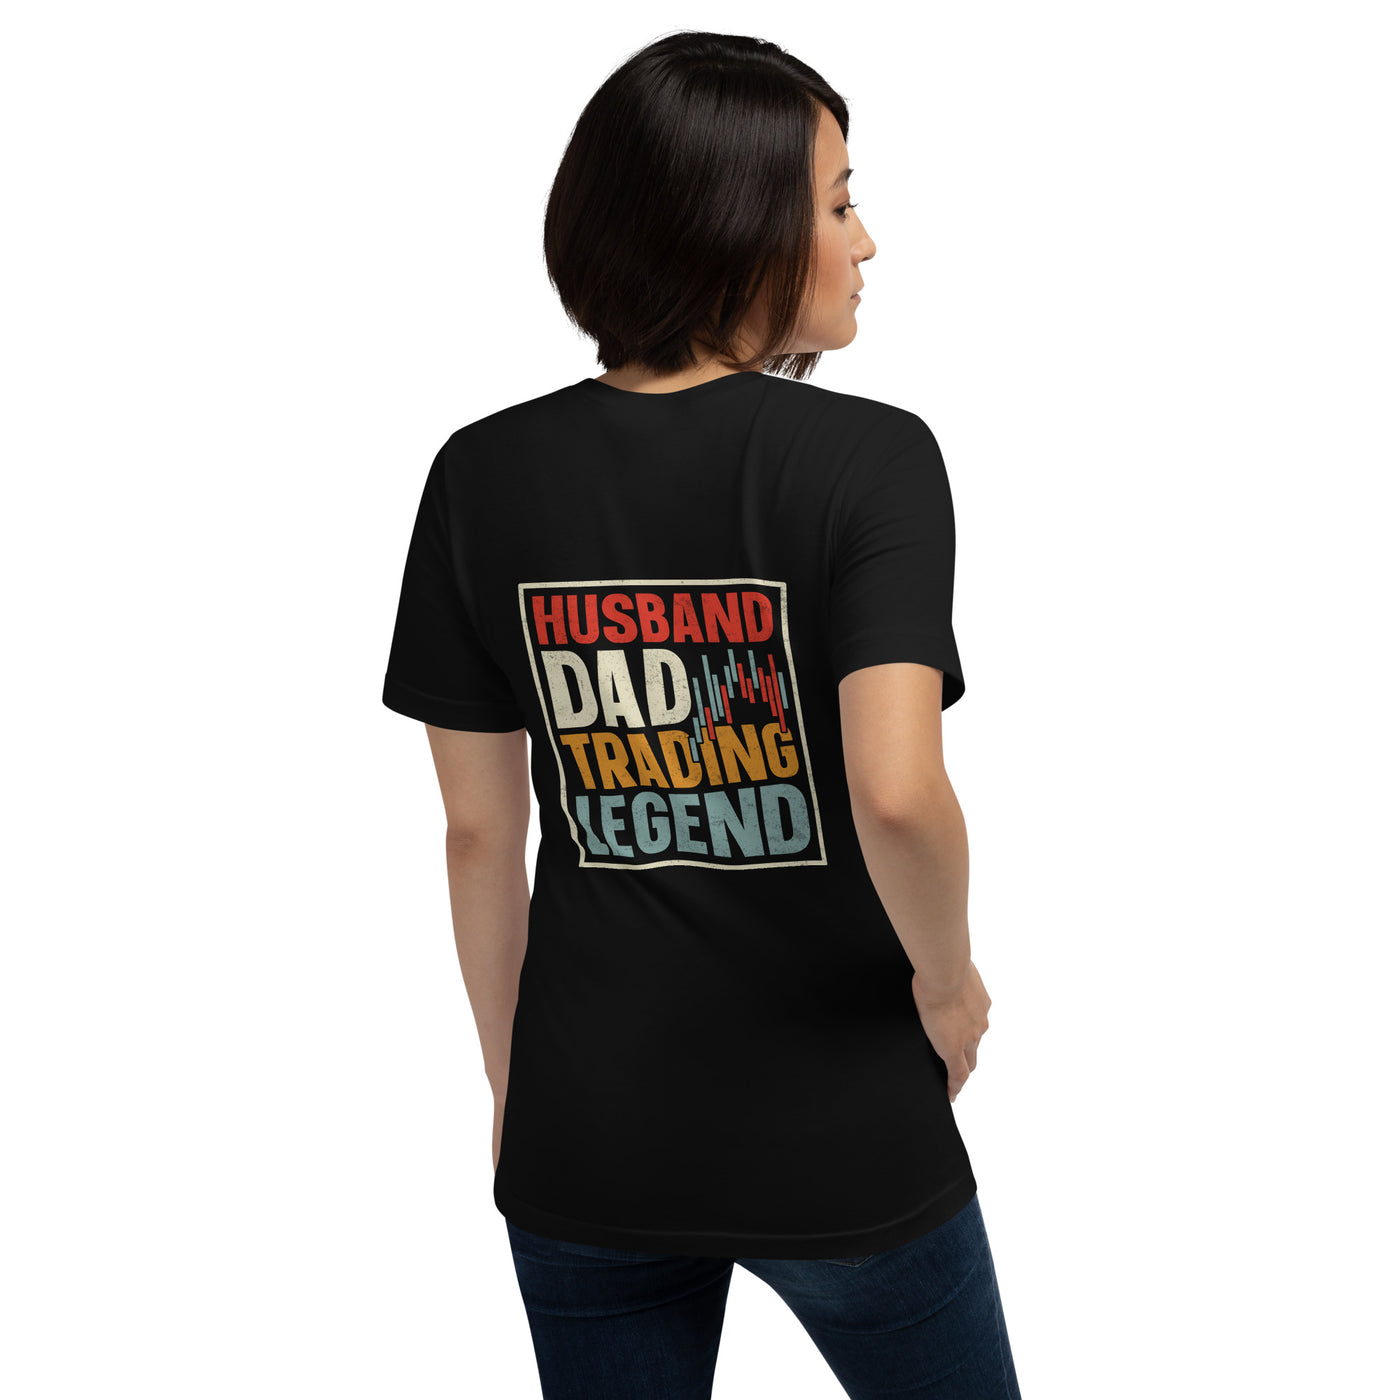 Husband, Dad, Trading Legend - Unisex t-shirt ( Back Print )